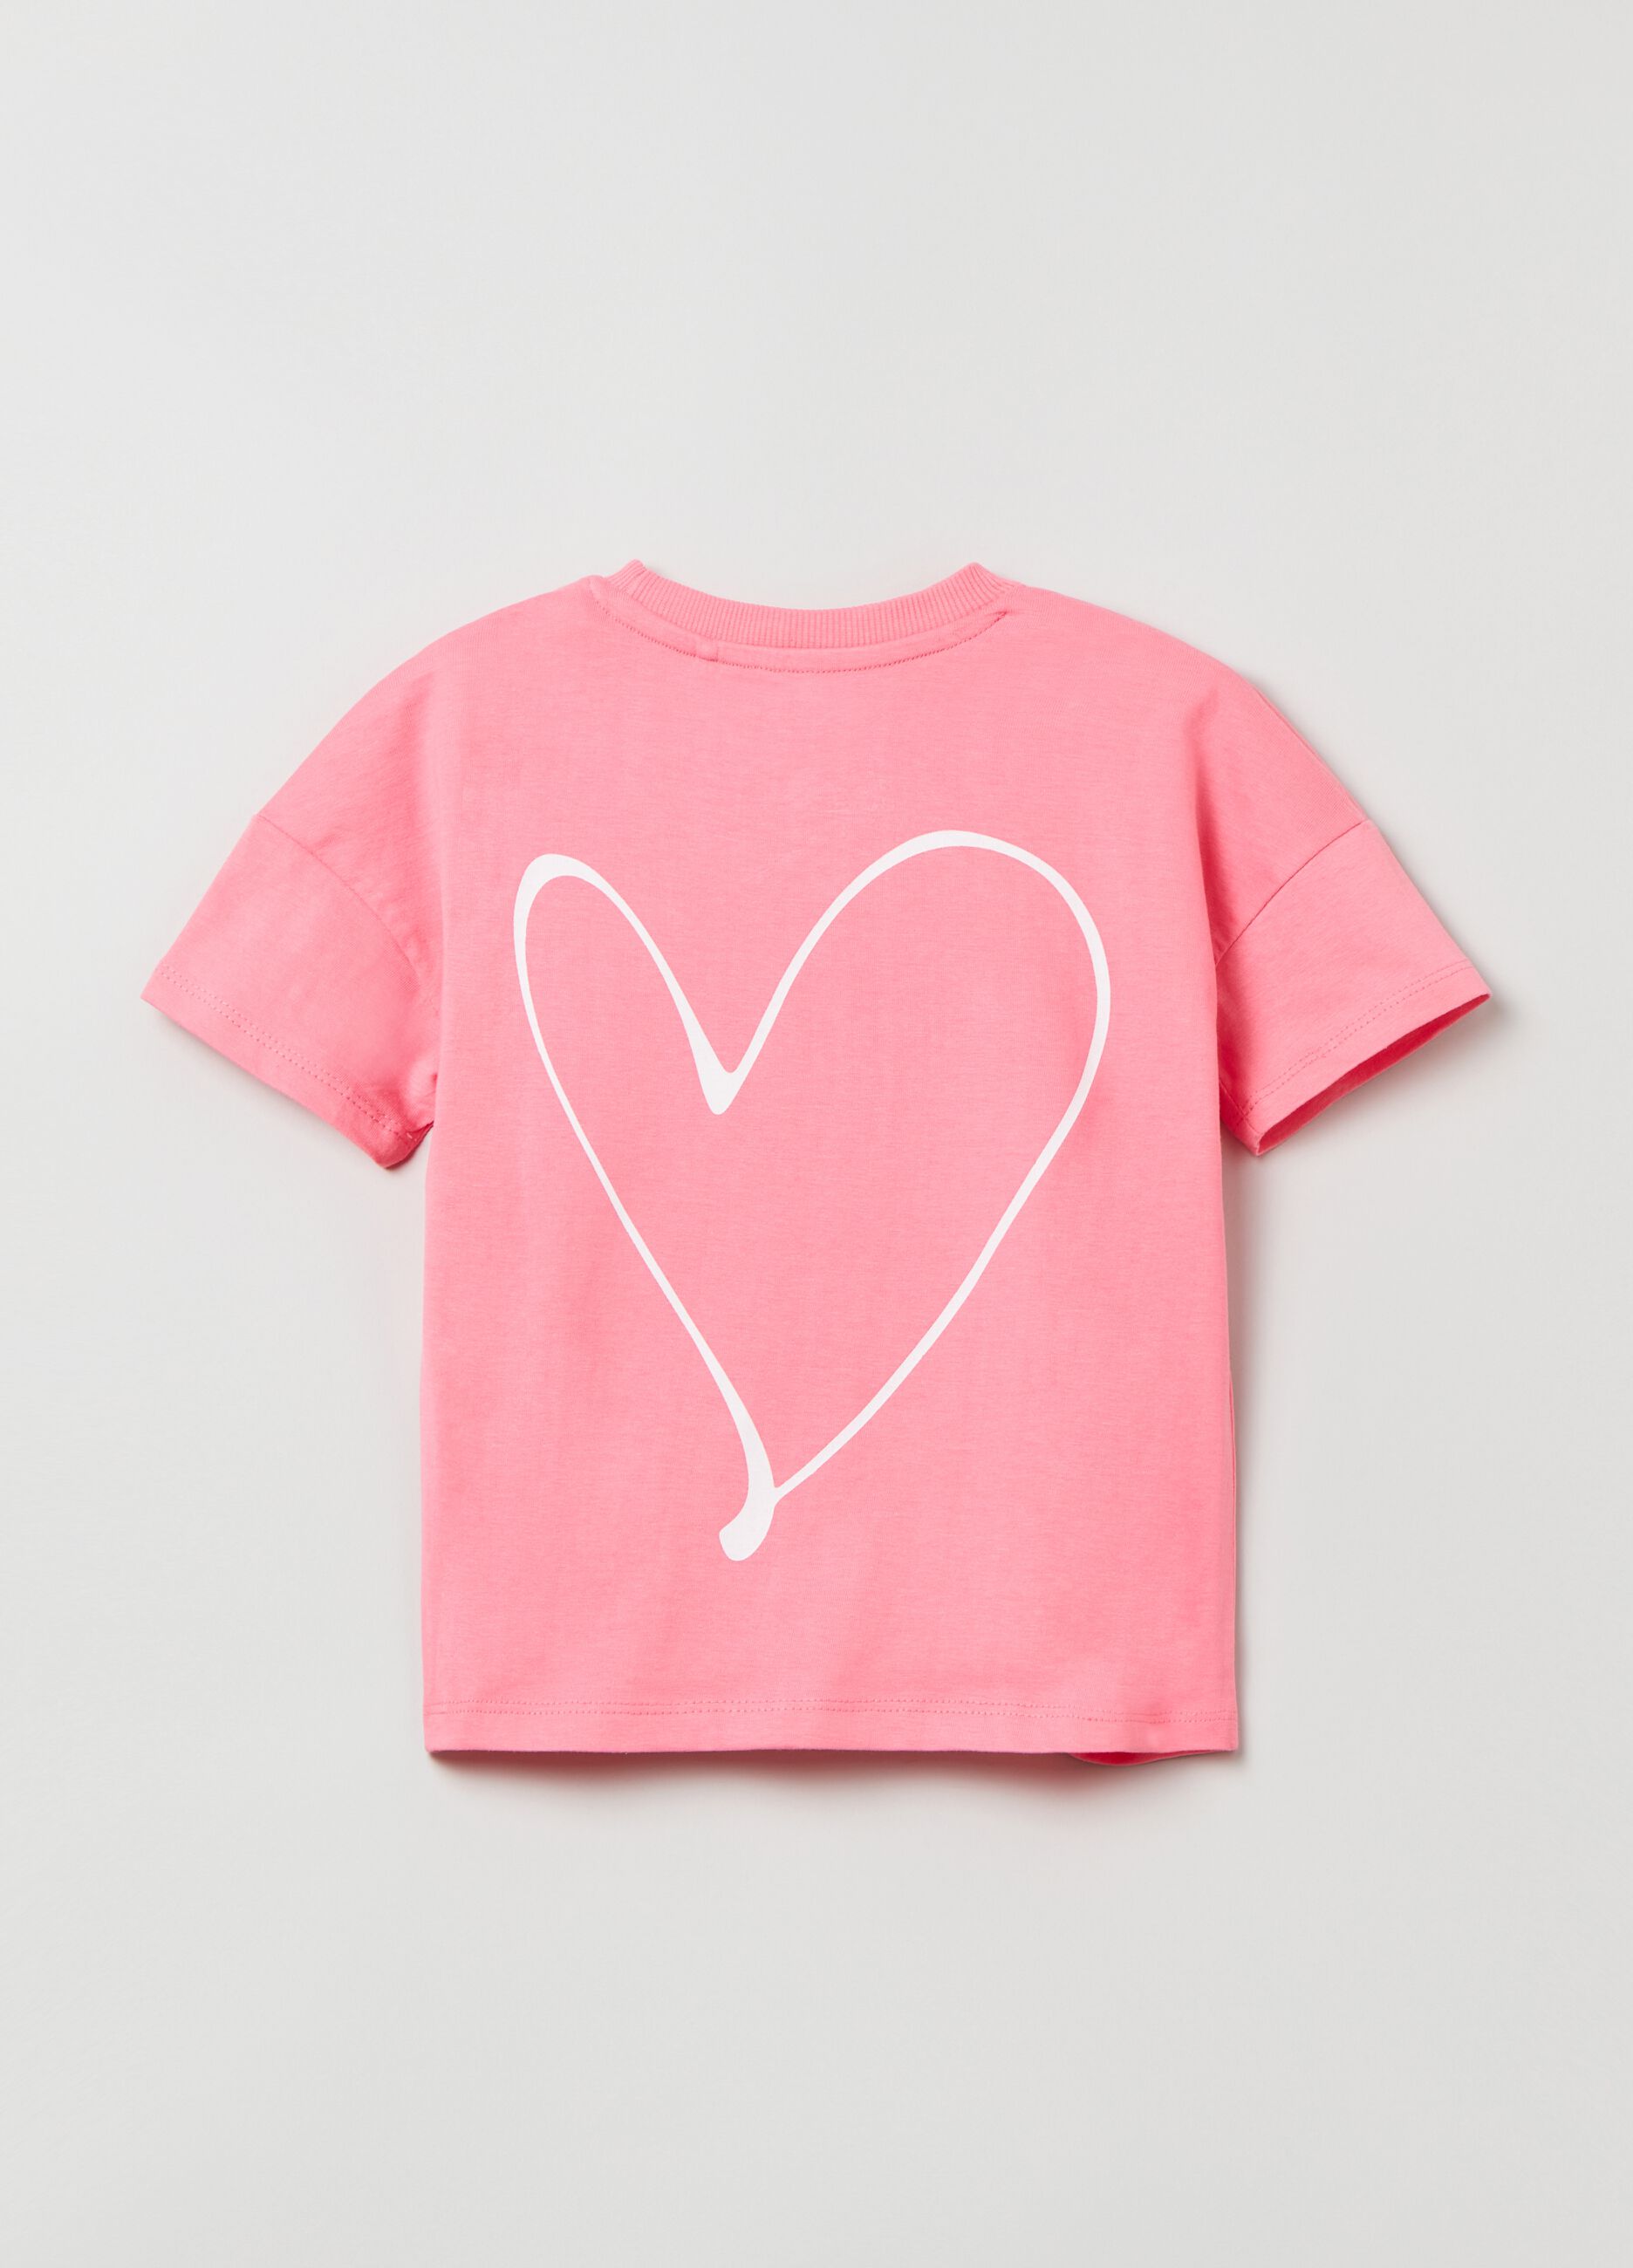 T-shirt in cotone stampa cuore e lettering